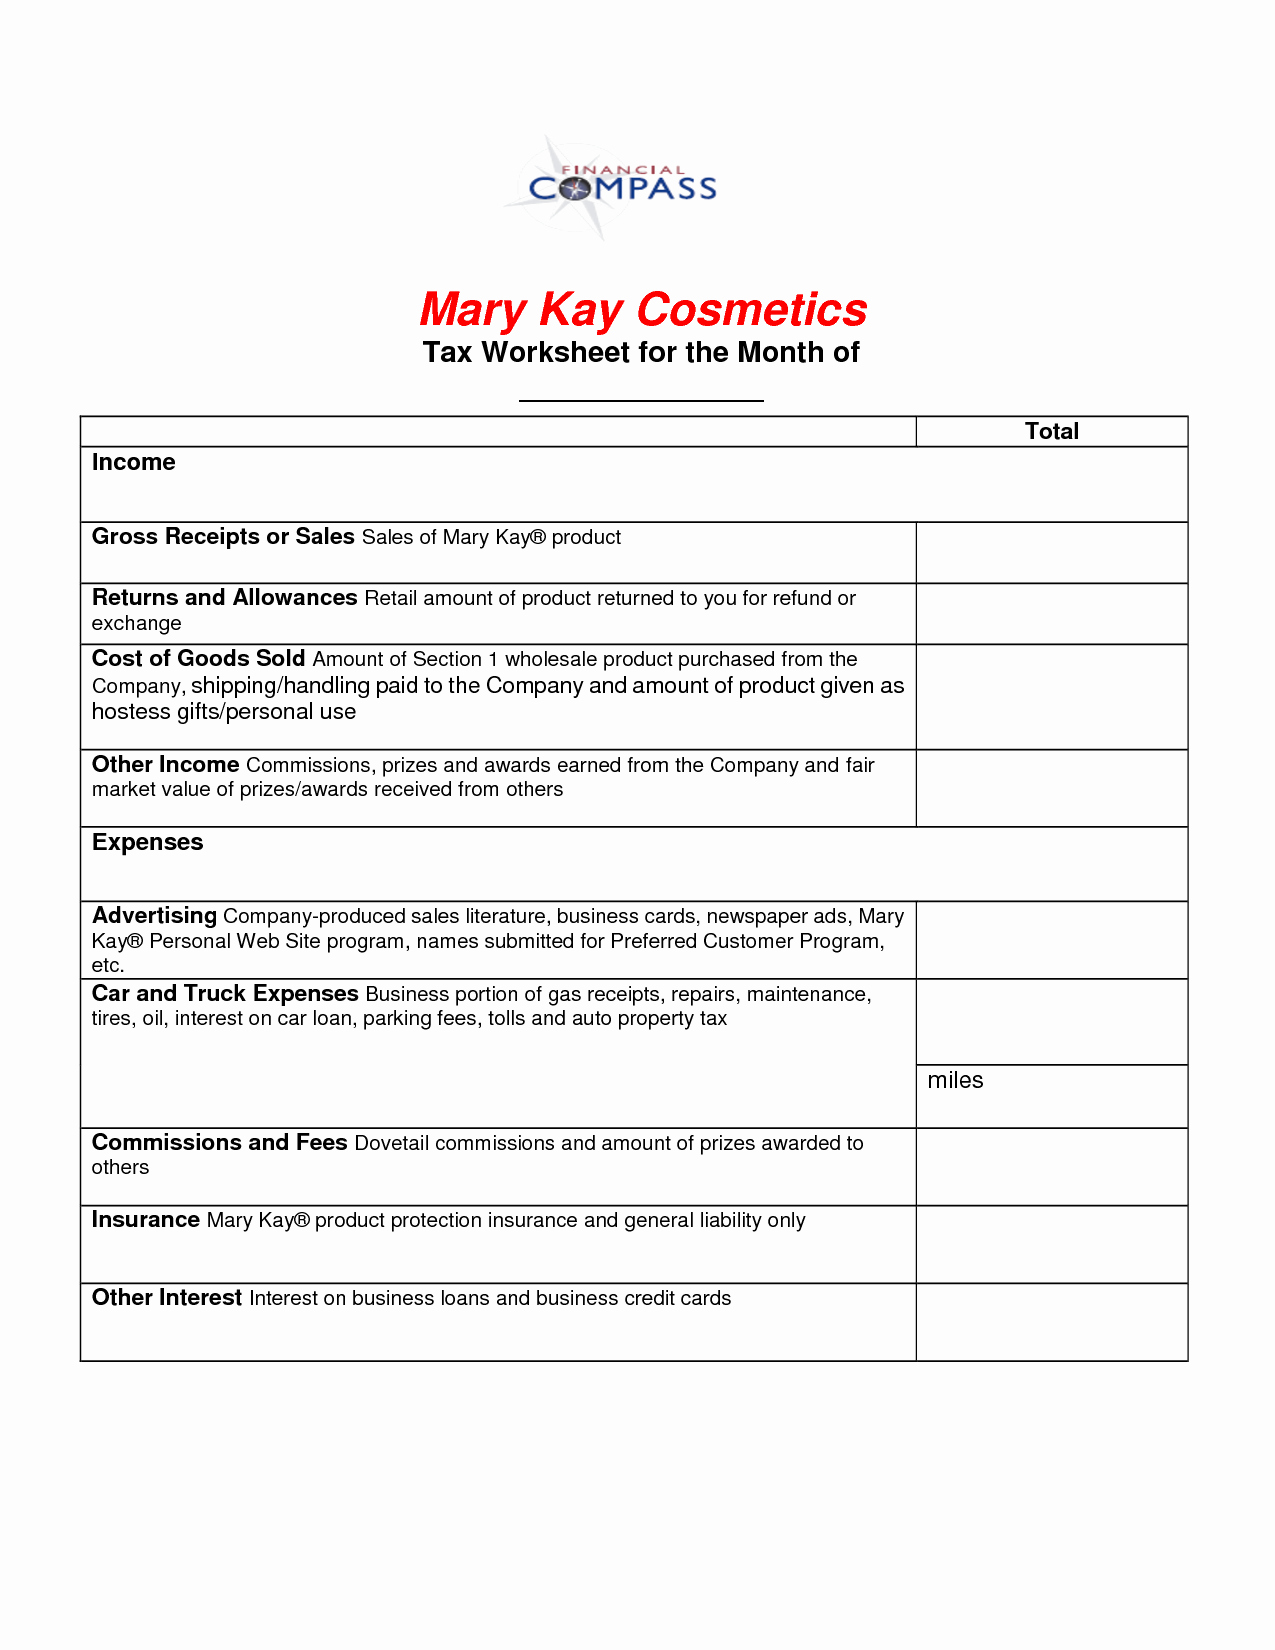 Mary Kay Customer Profile Template Beautiful Mary Kay Inventory for Taxes